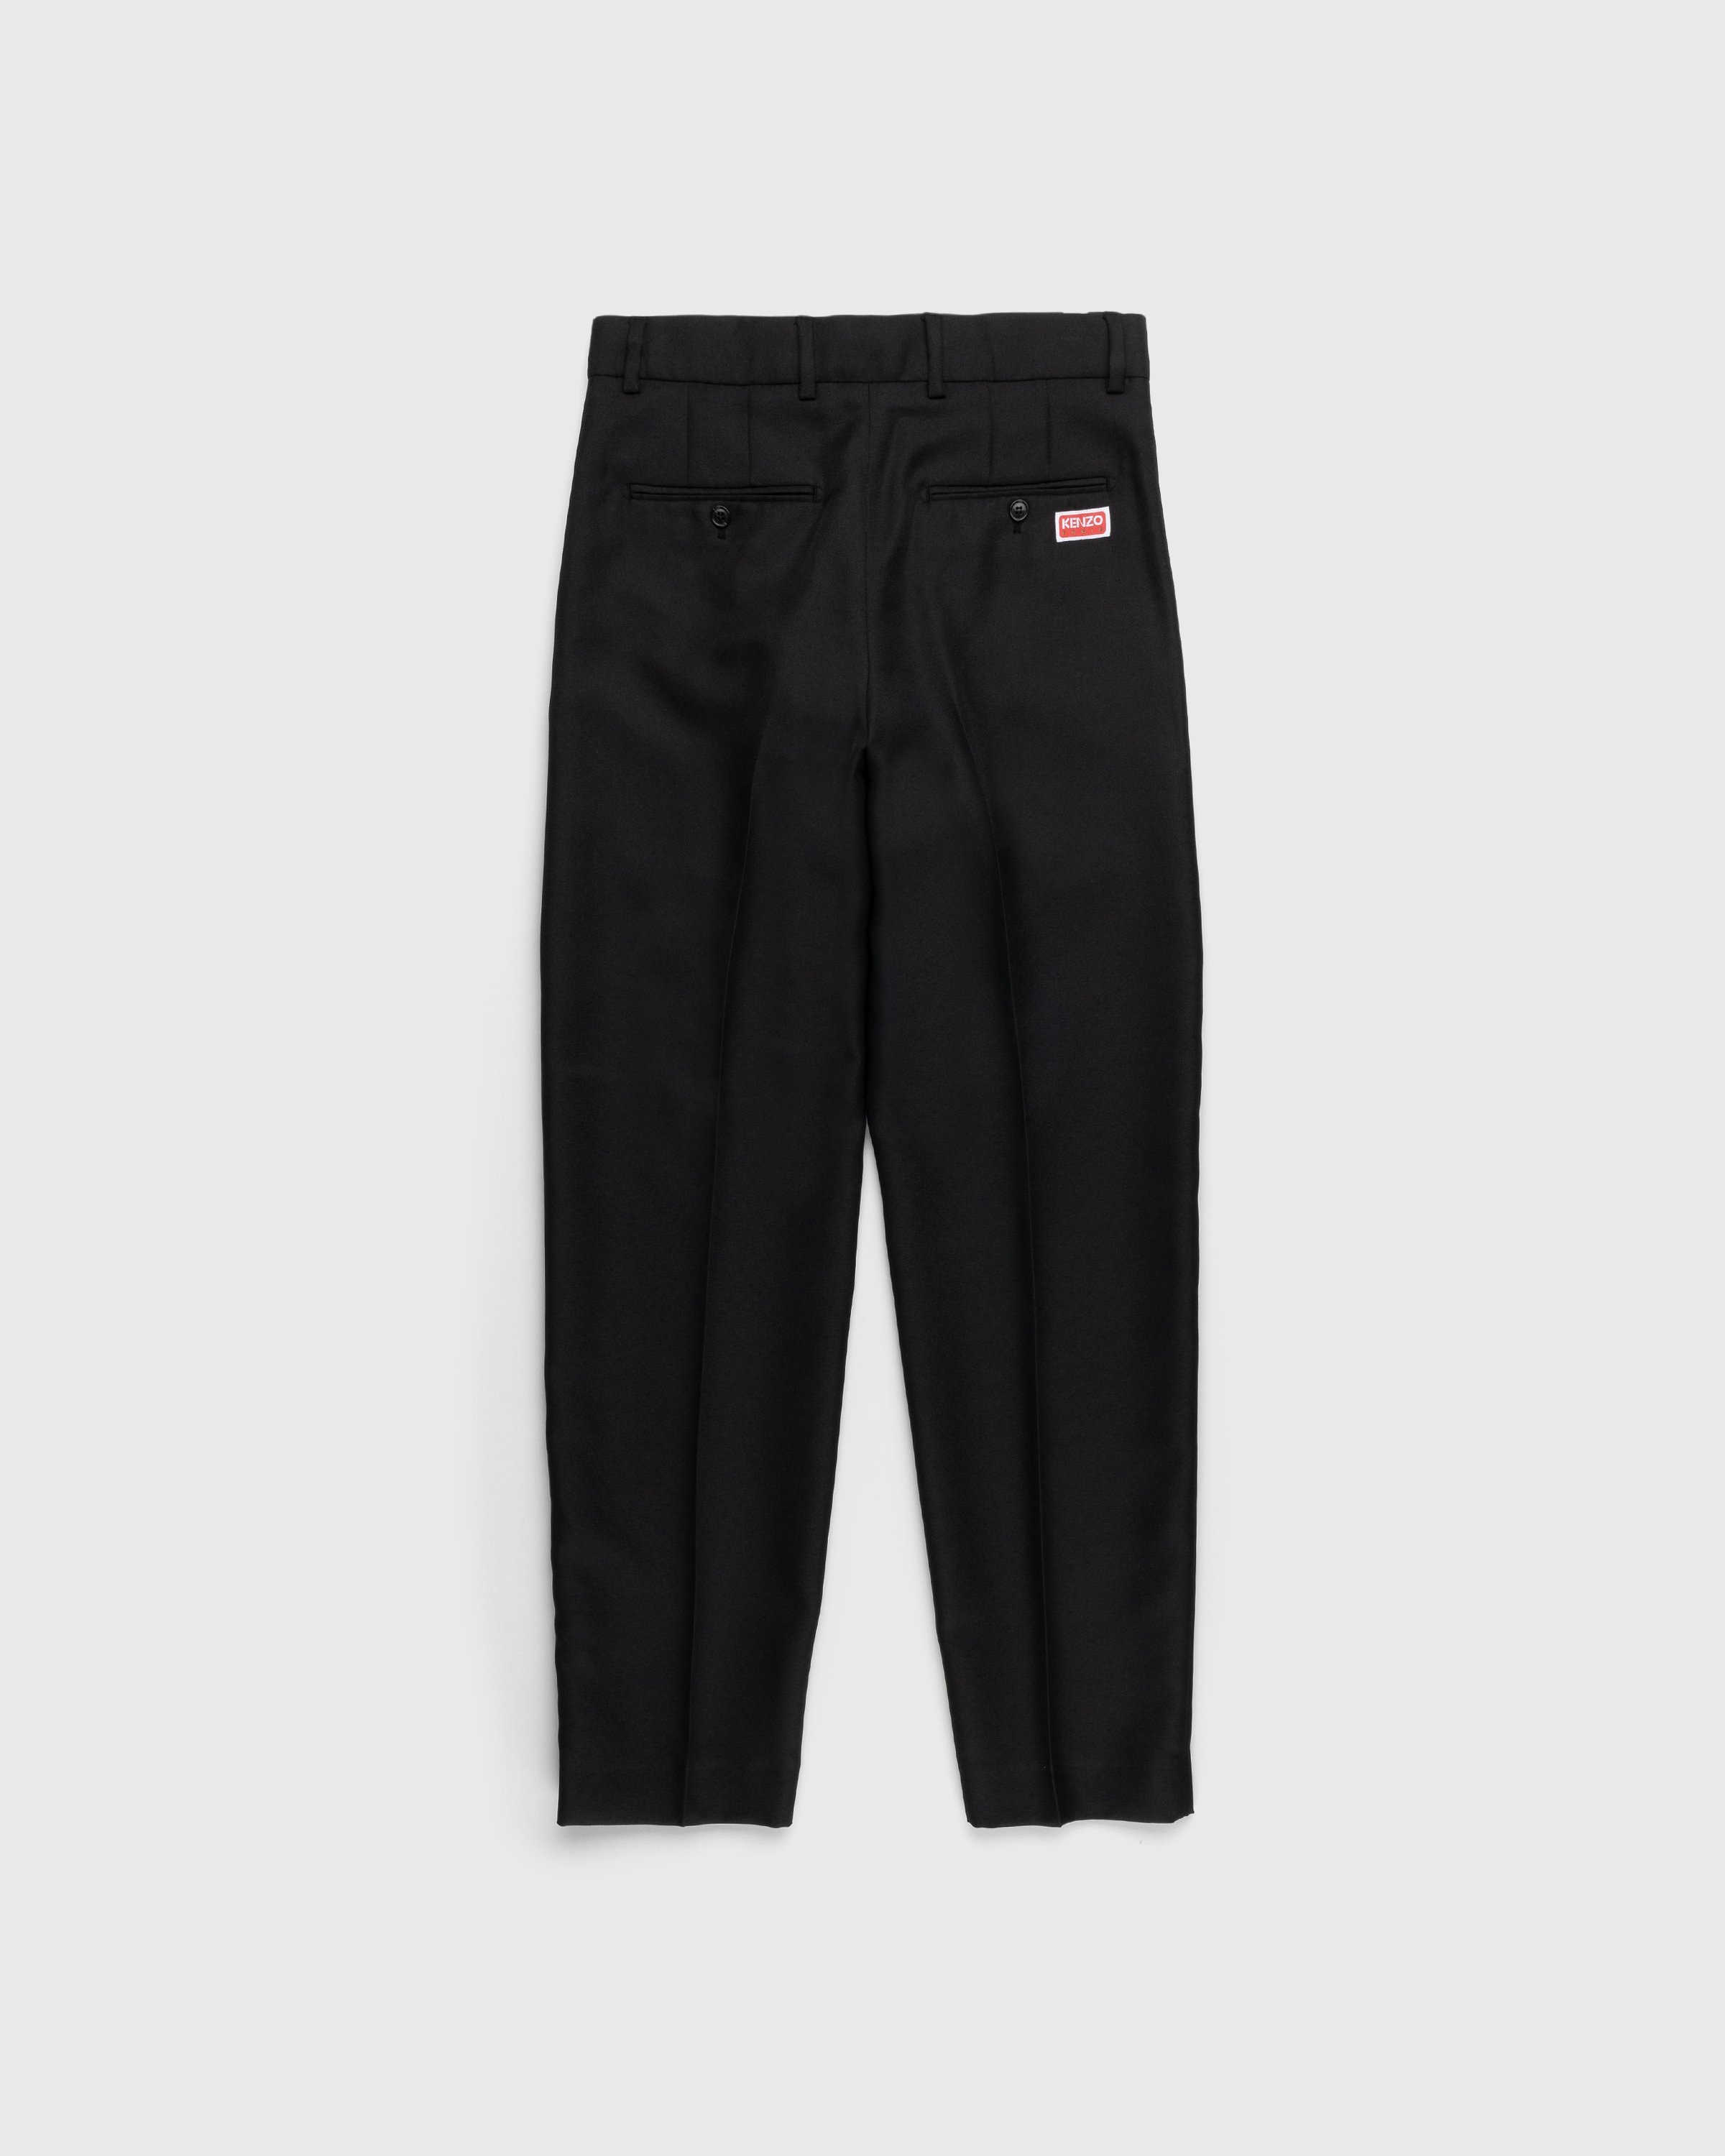 Kenzo - Slim-Fit Trousers Black - Clothing - Black - Image 2